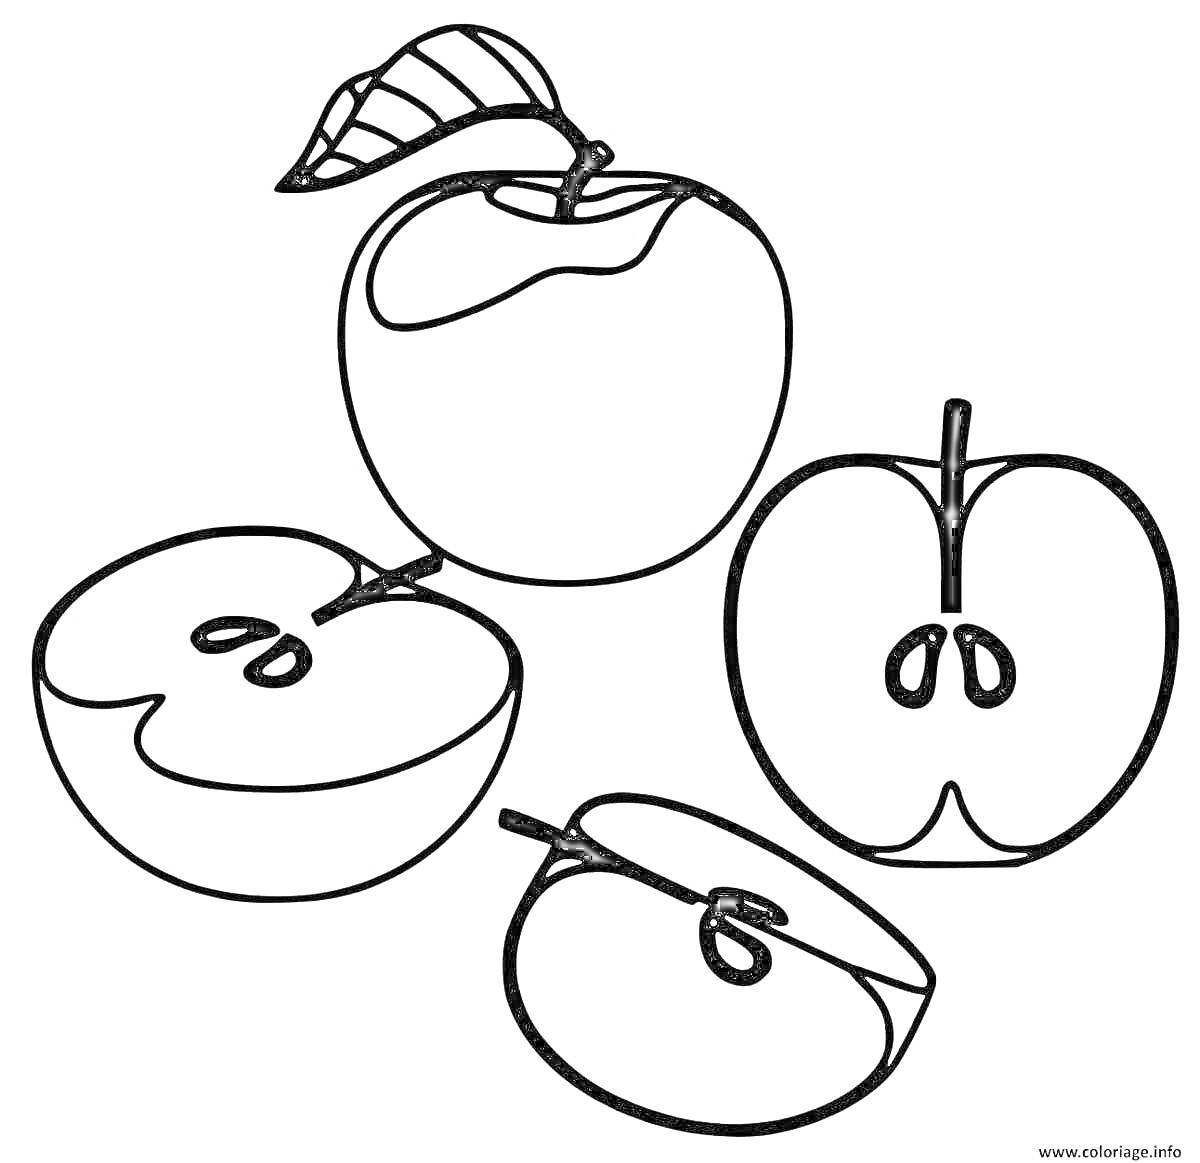 На раскраске изображено: Яблоко, Разрезанное яблоко, Еда, Целое яблоко